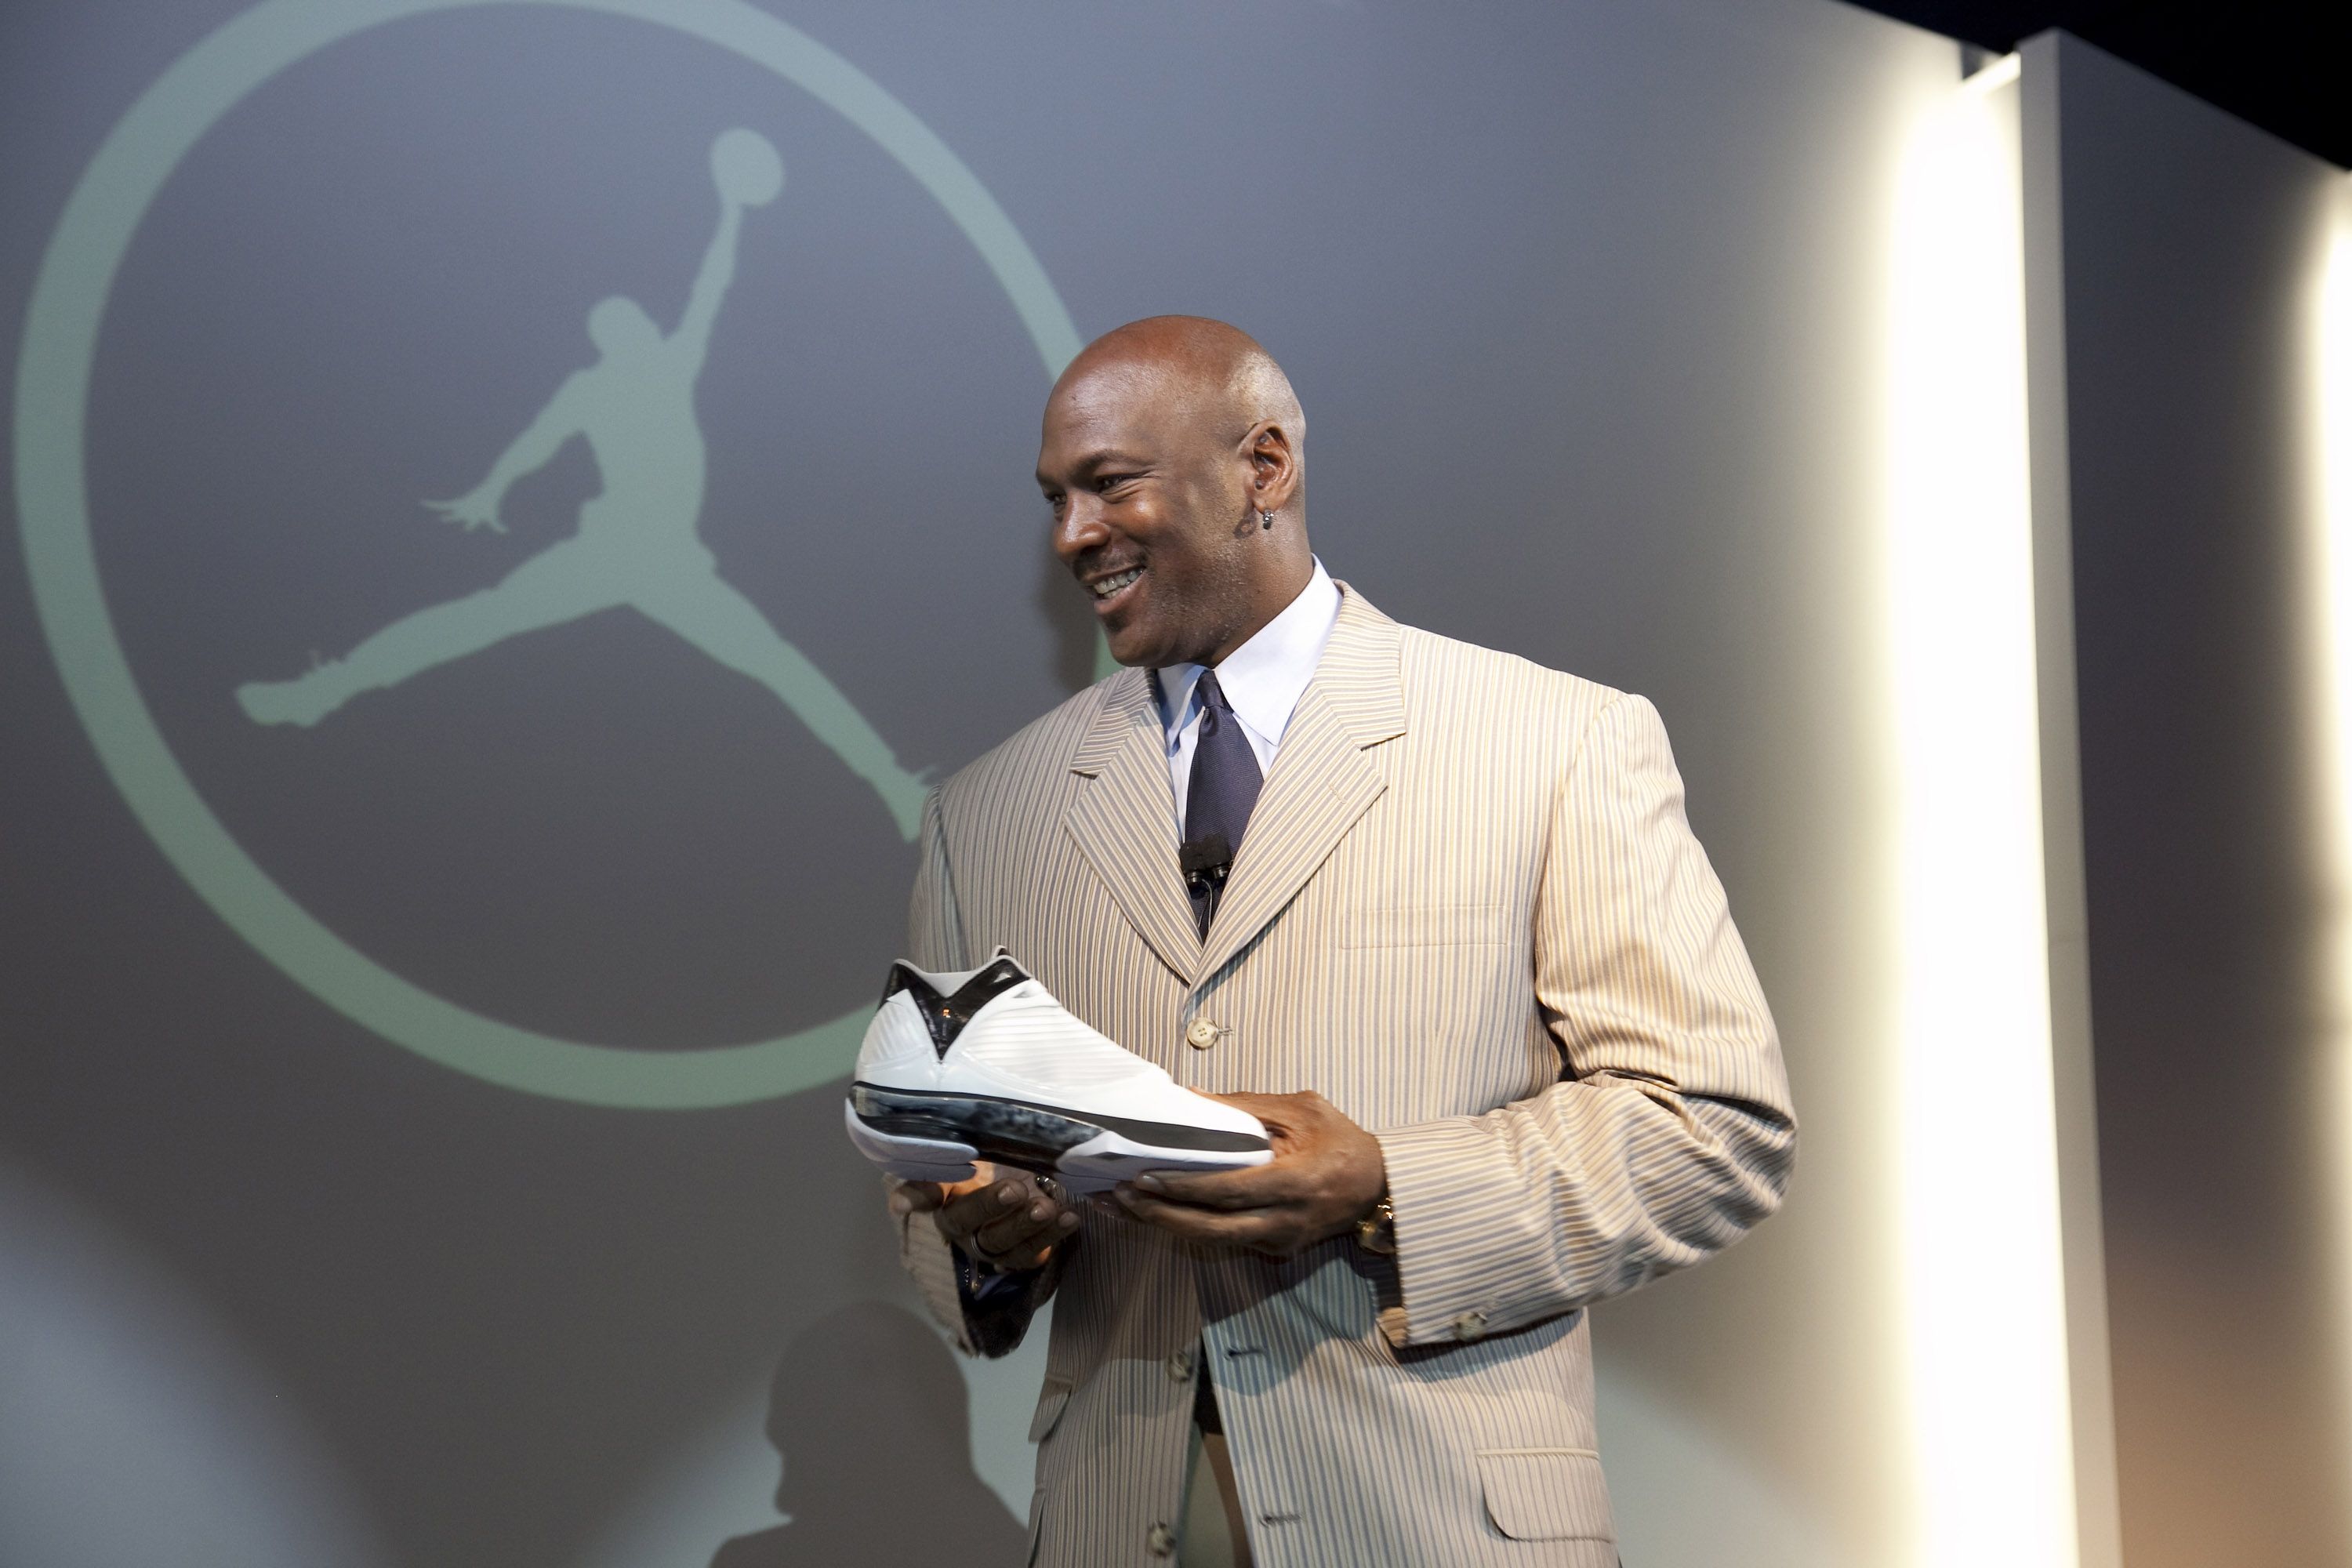 Michael Jordan, Biography, Stats, & Facts